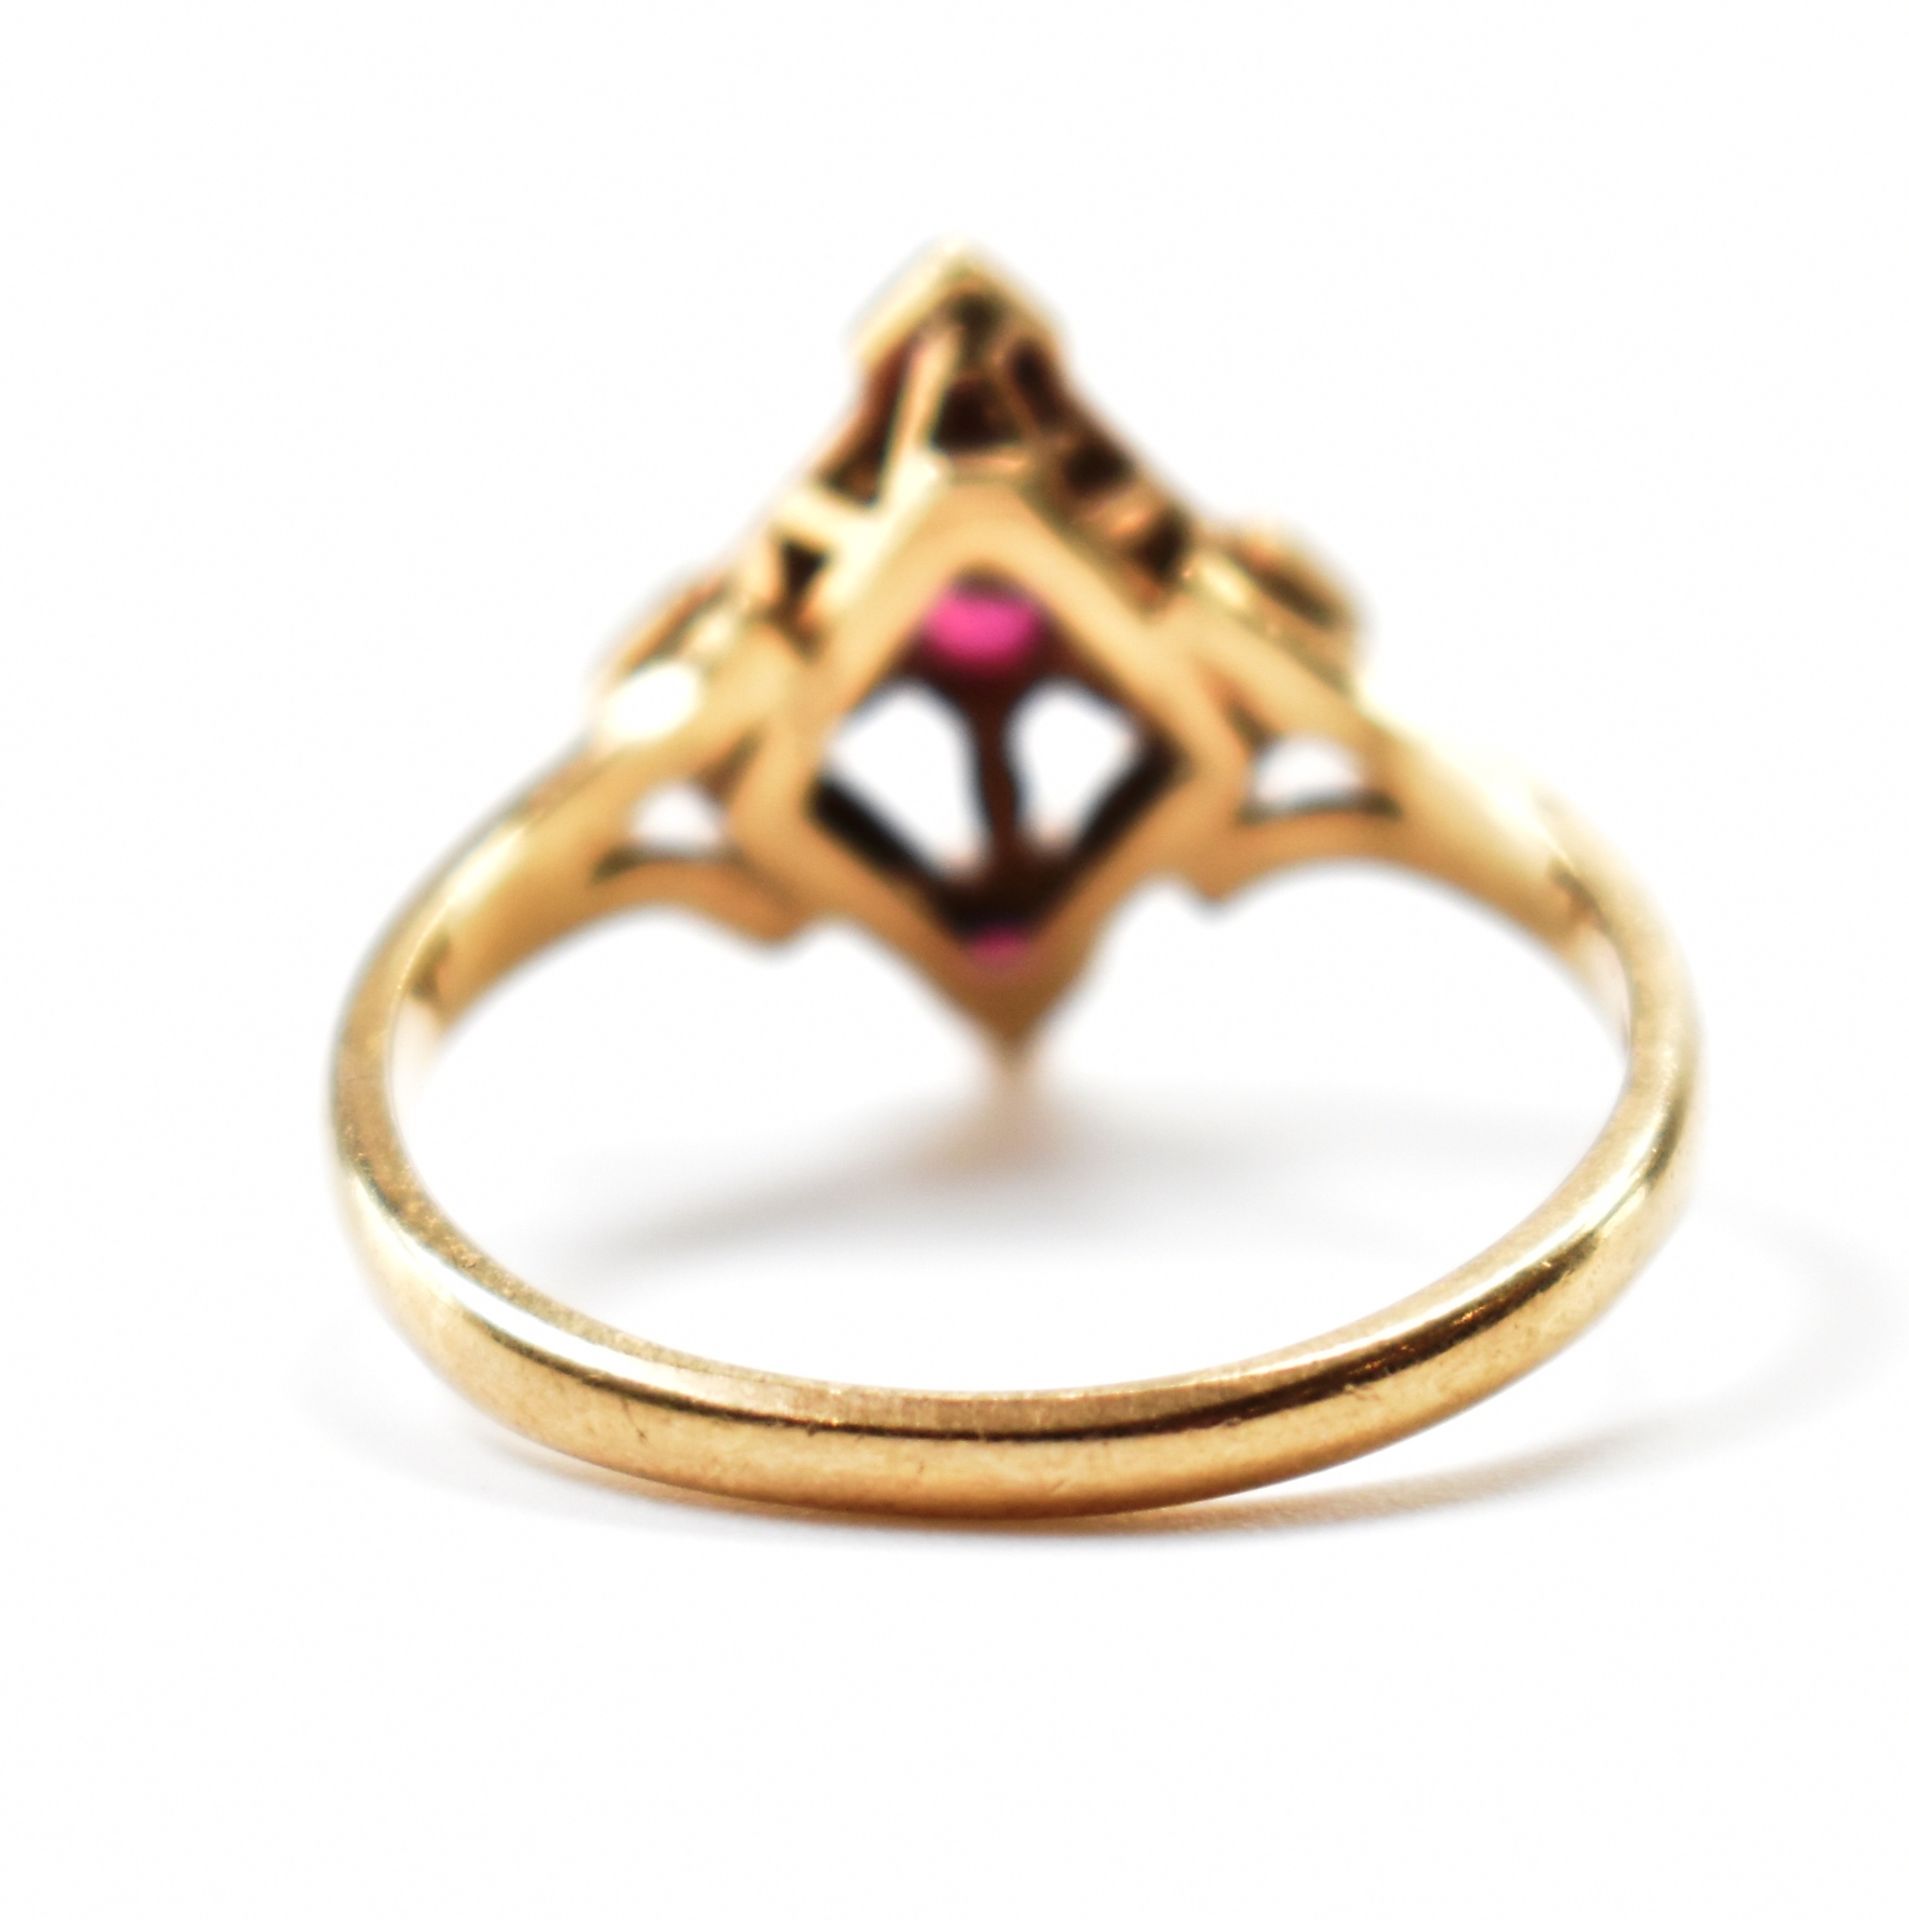 HALLMARKED 9CT GOLD RUBY & DIAMOND RING - Image 4 of 10